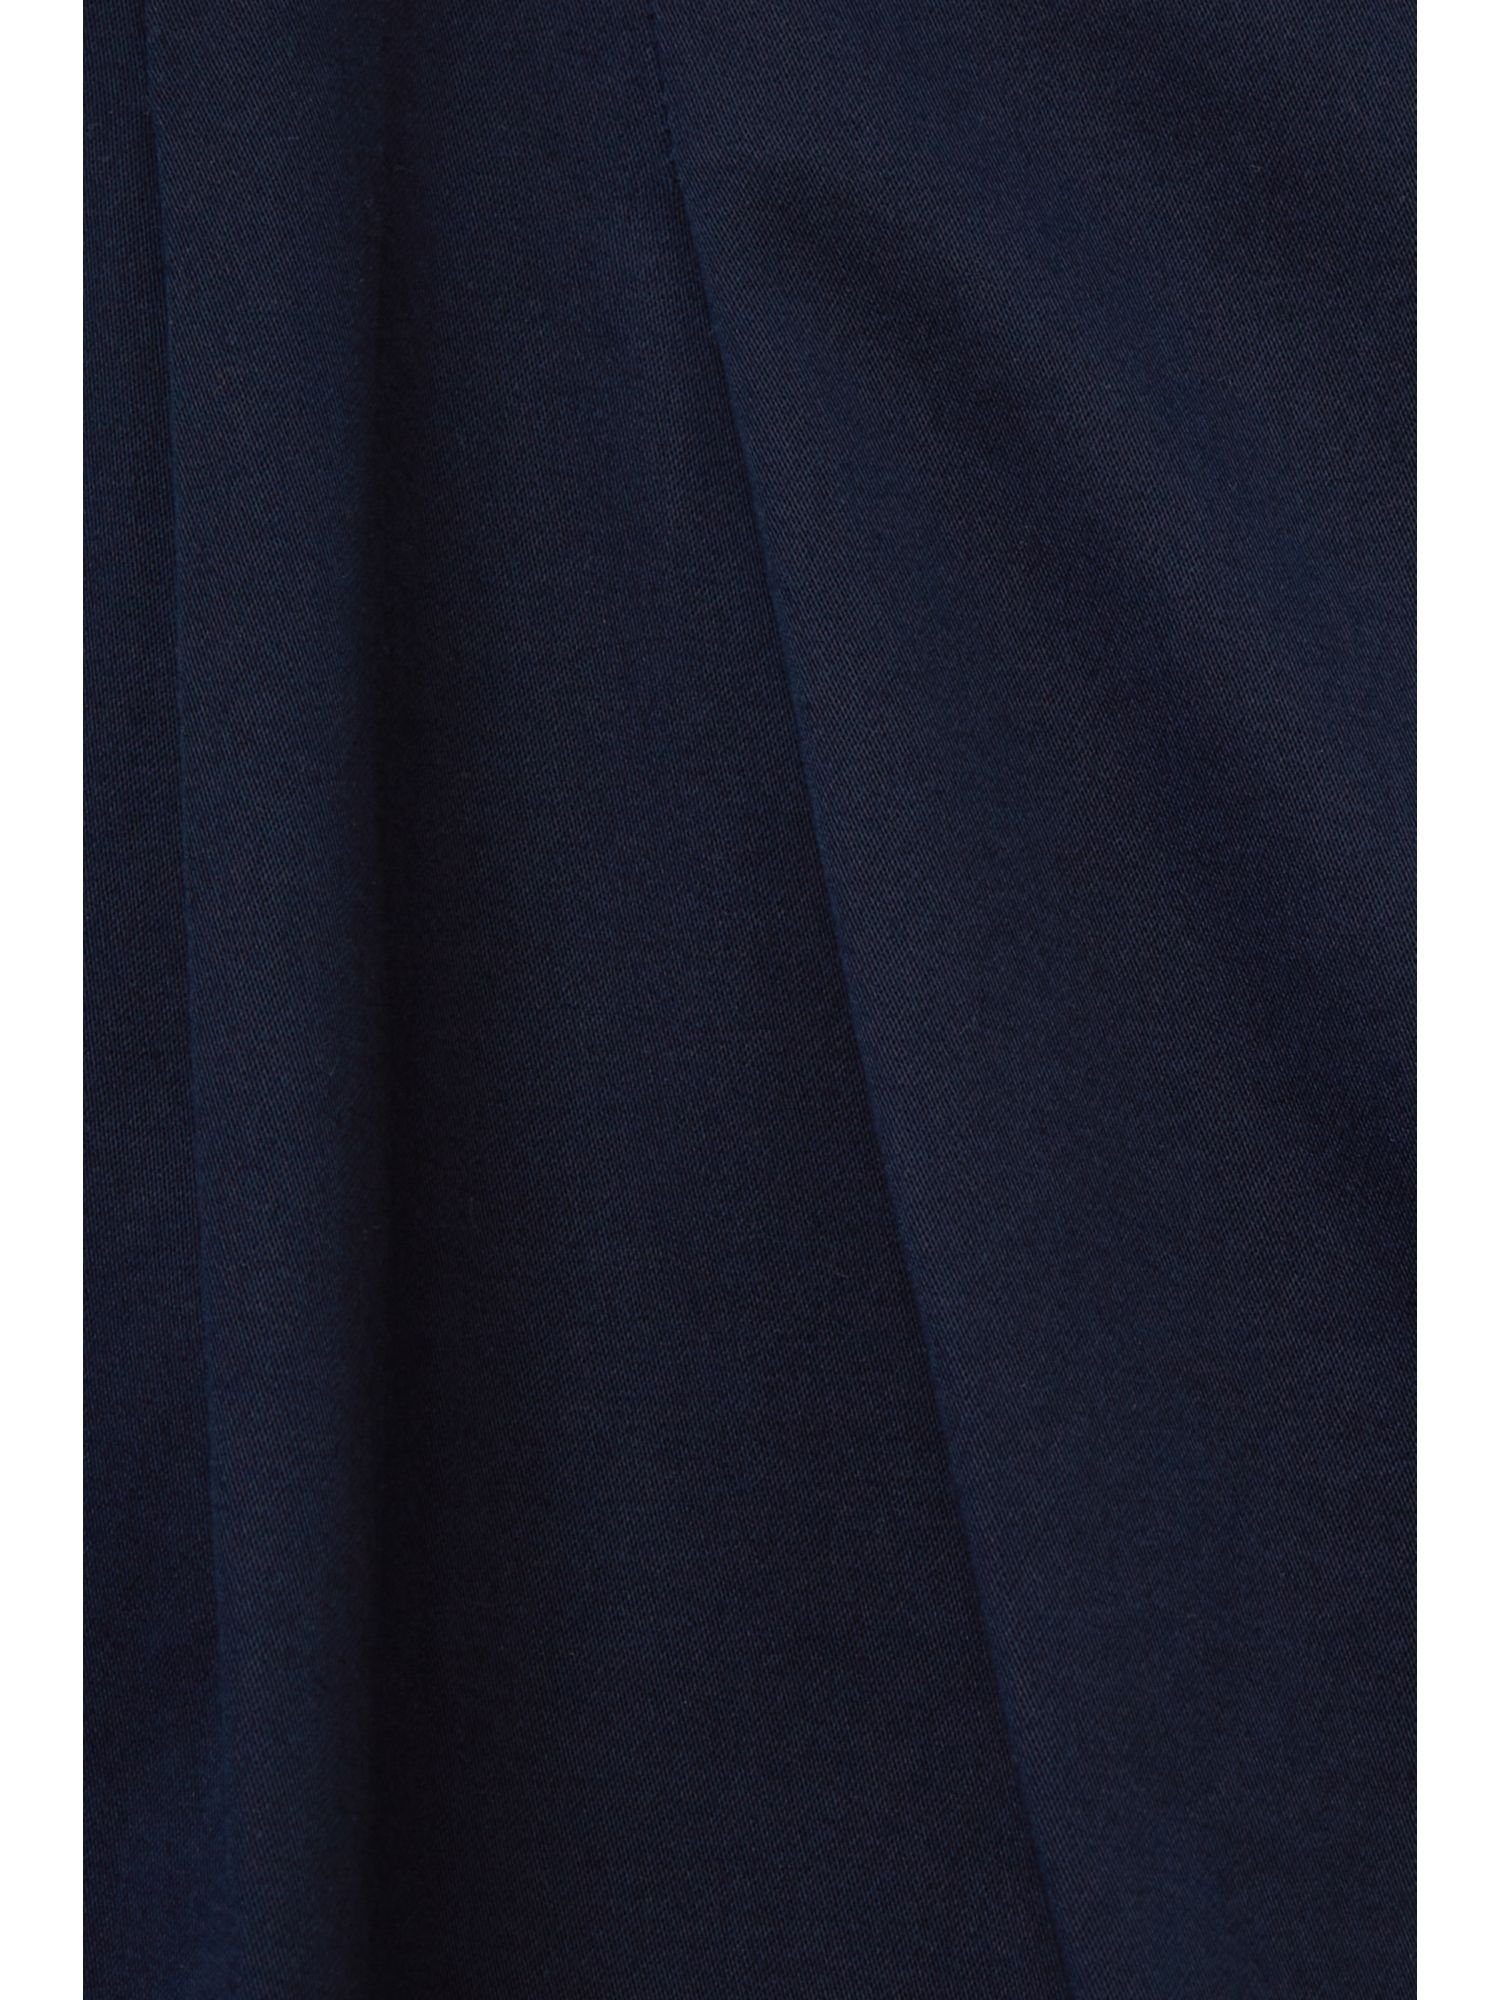 woven Esprit Pants Collection NAVY 7/8-Hose